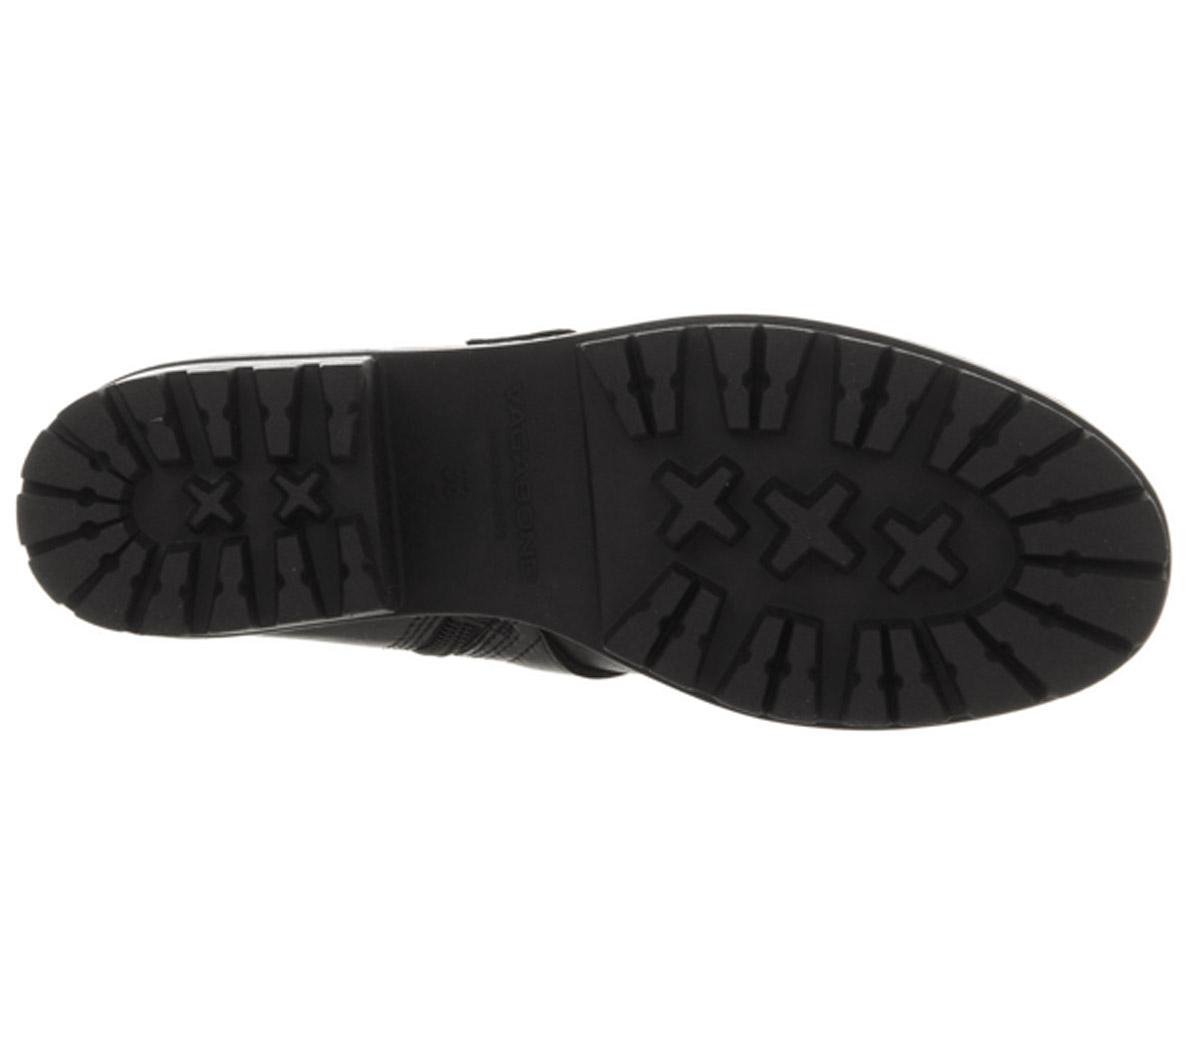 Vagabond Shoemakers Strap boots Black Leather - Women's Ankle Boots